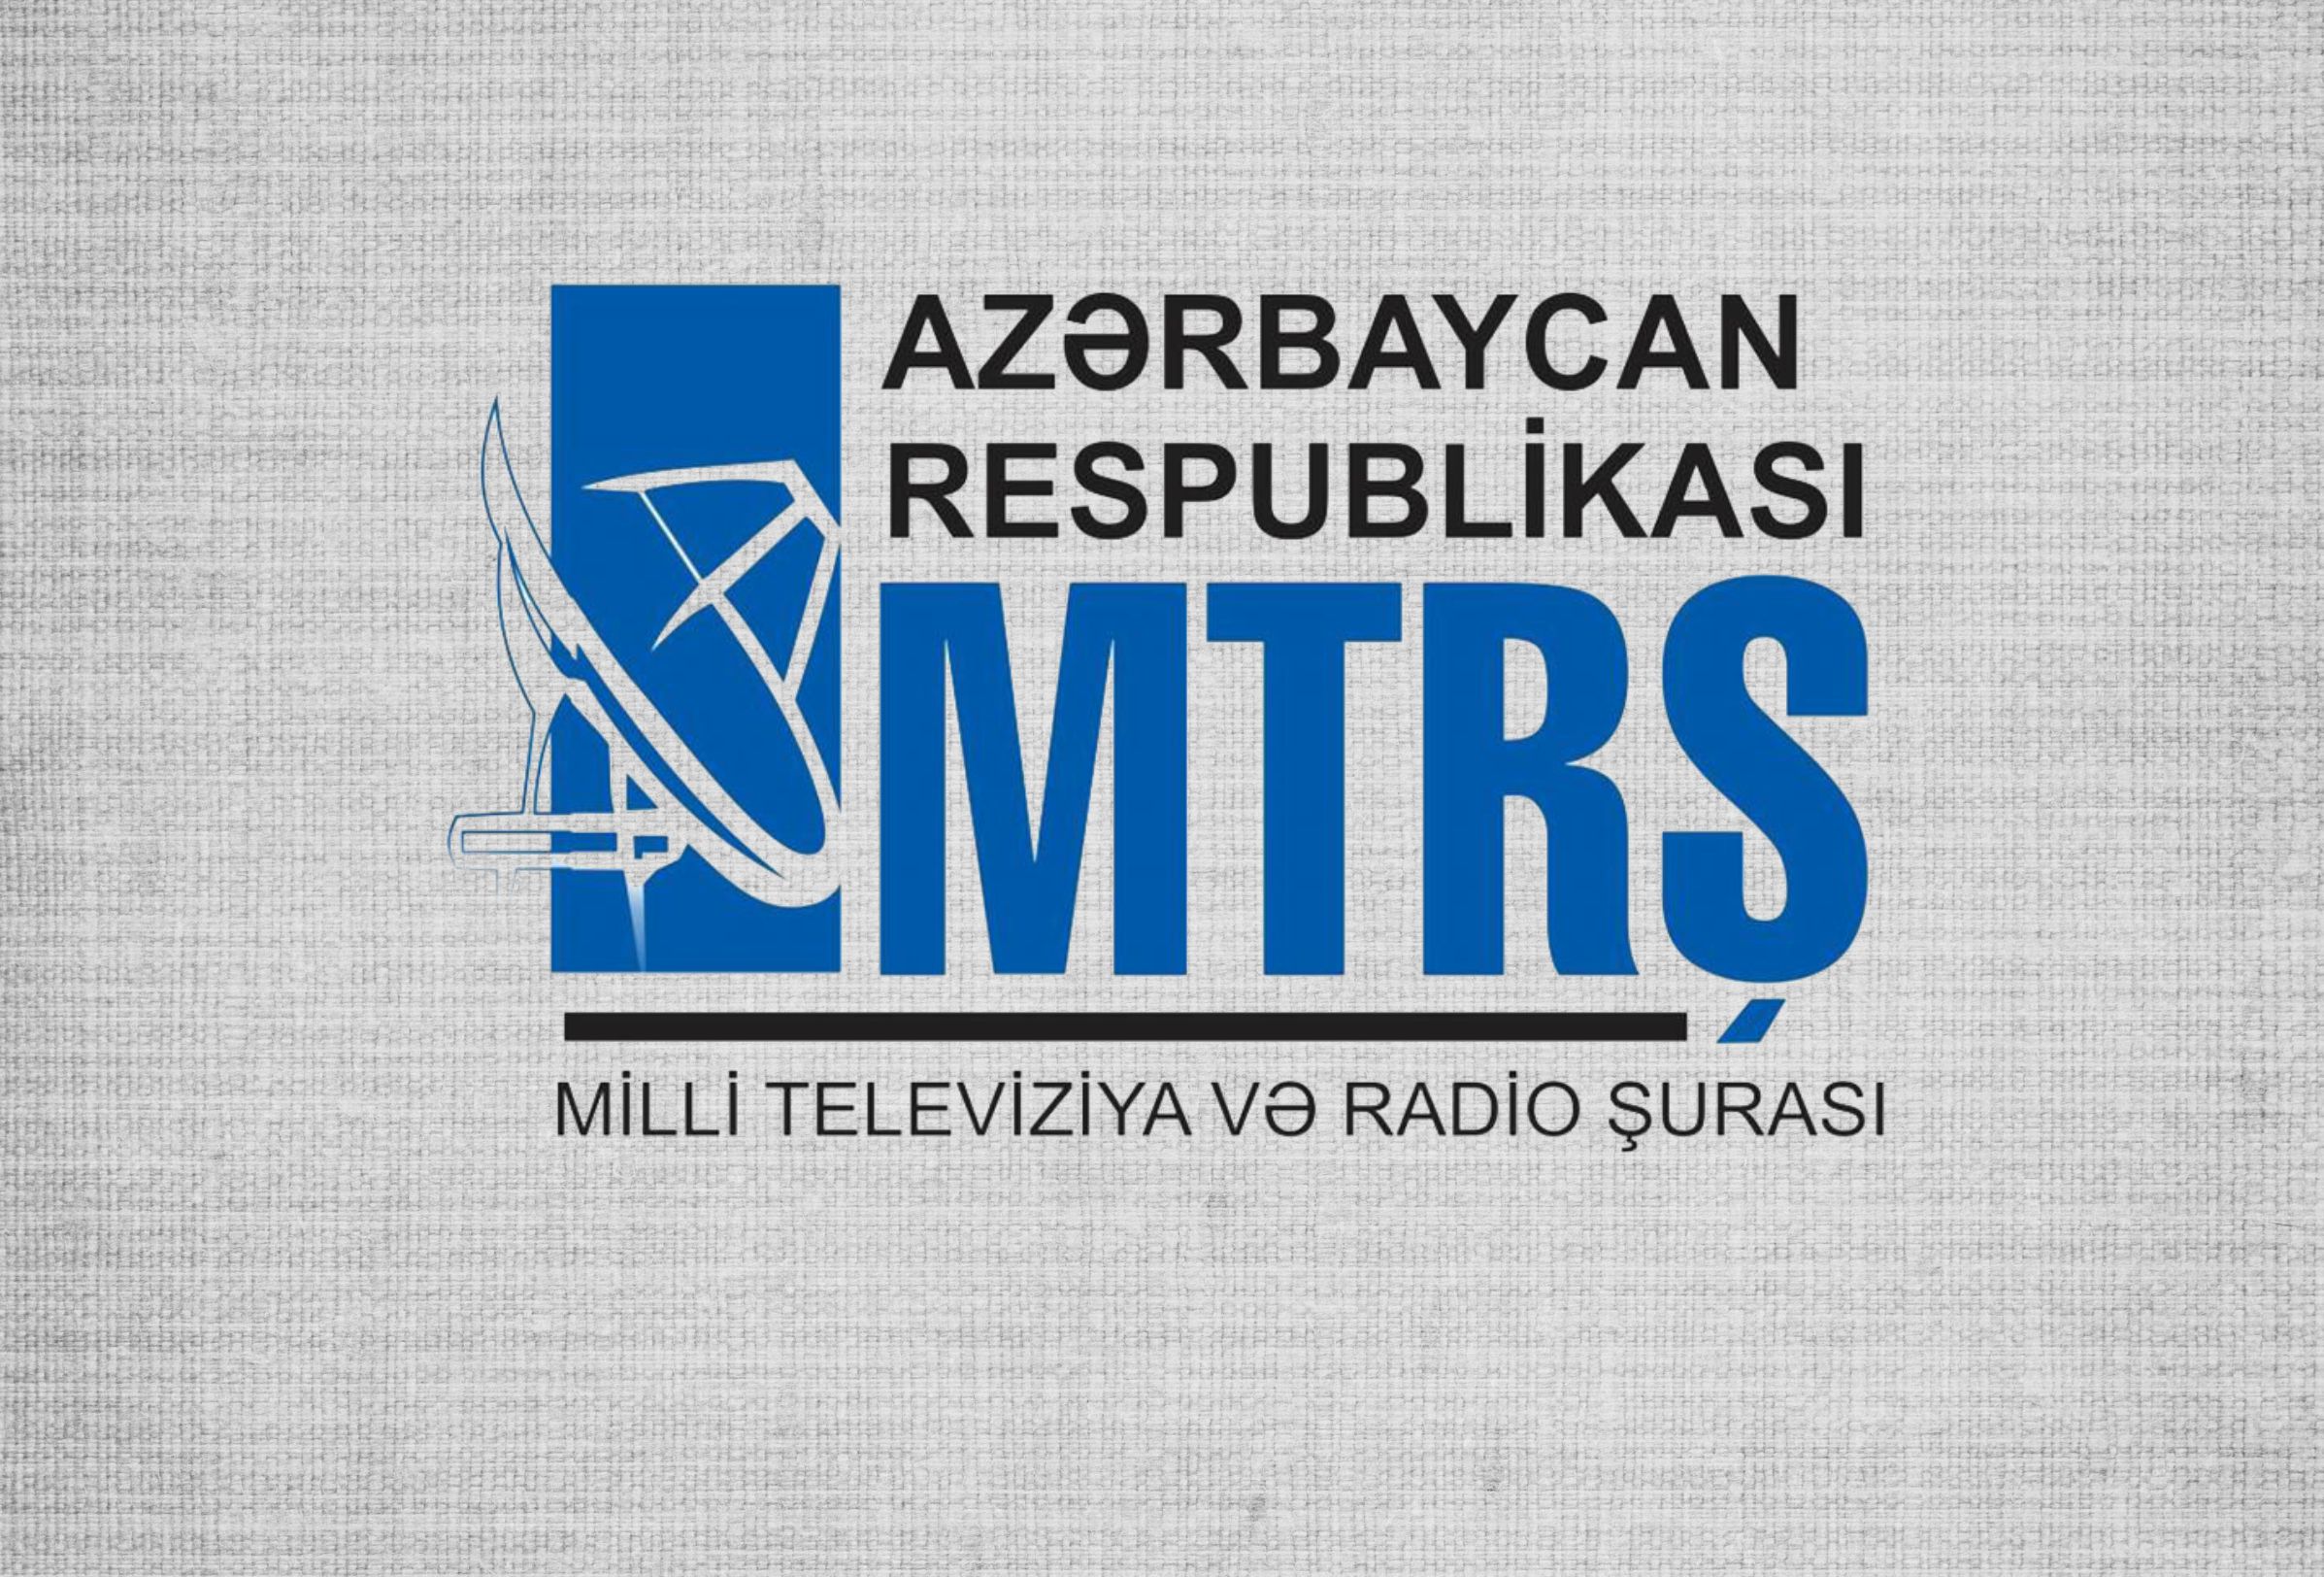 Azerbaijan allocates 600,000 AZN for 5 TV channels each - LIST